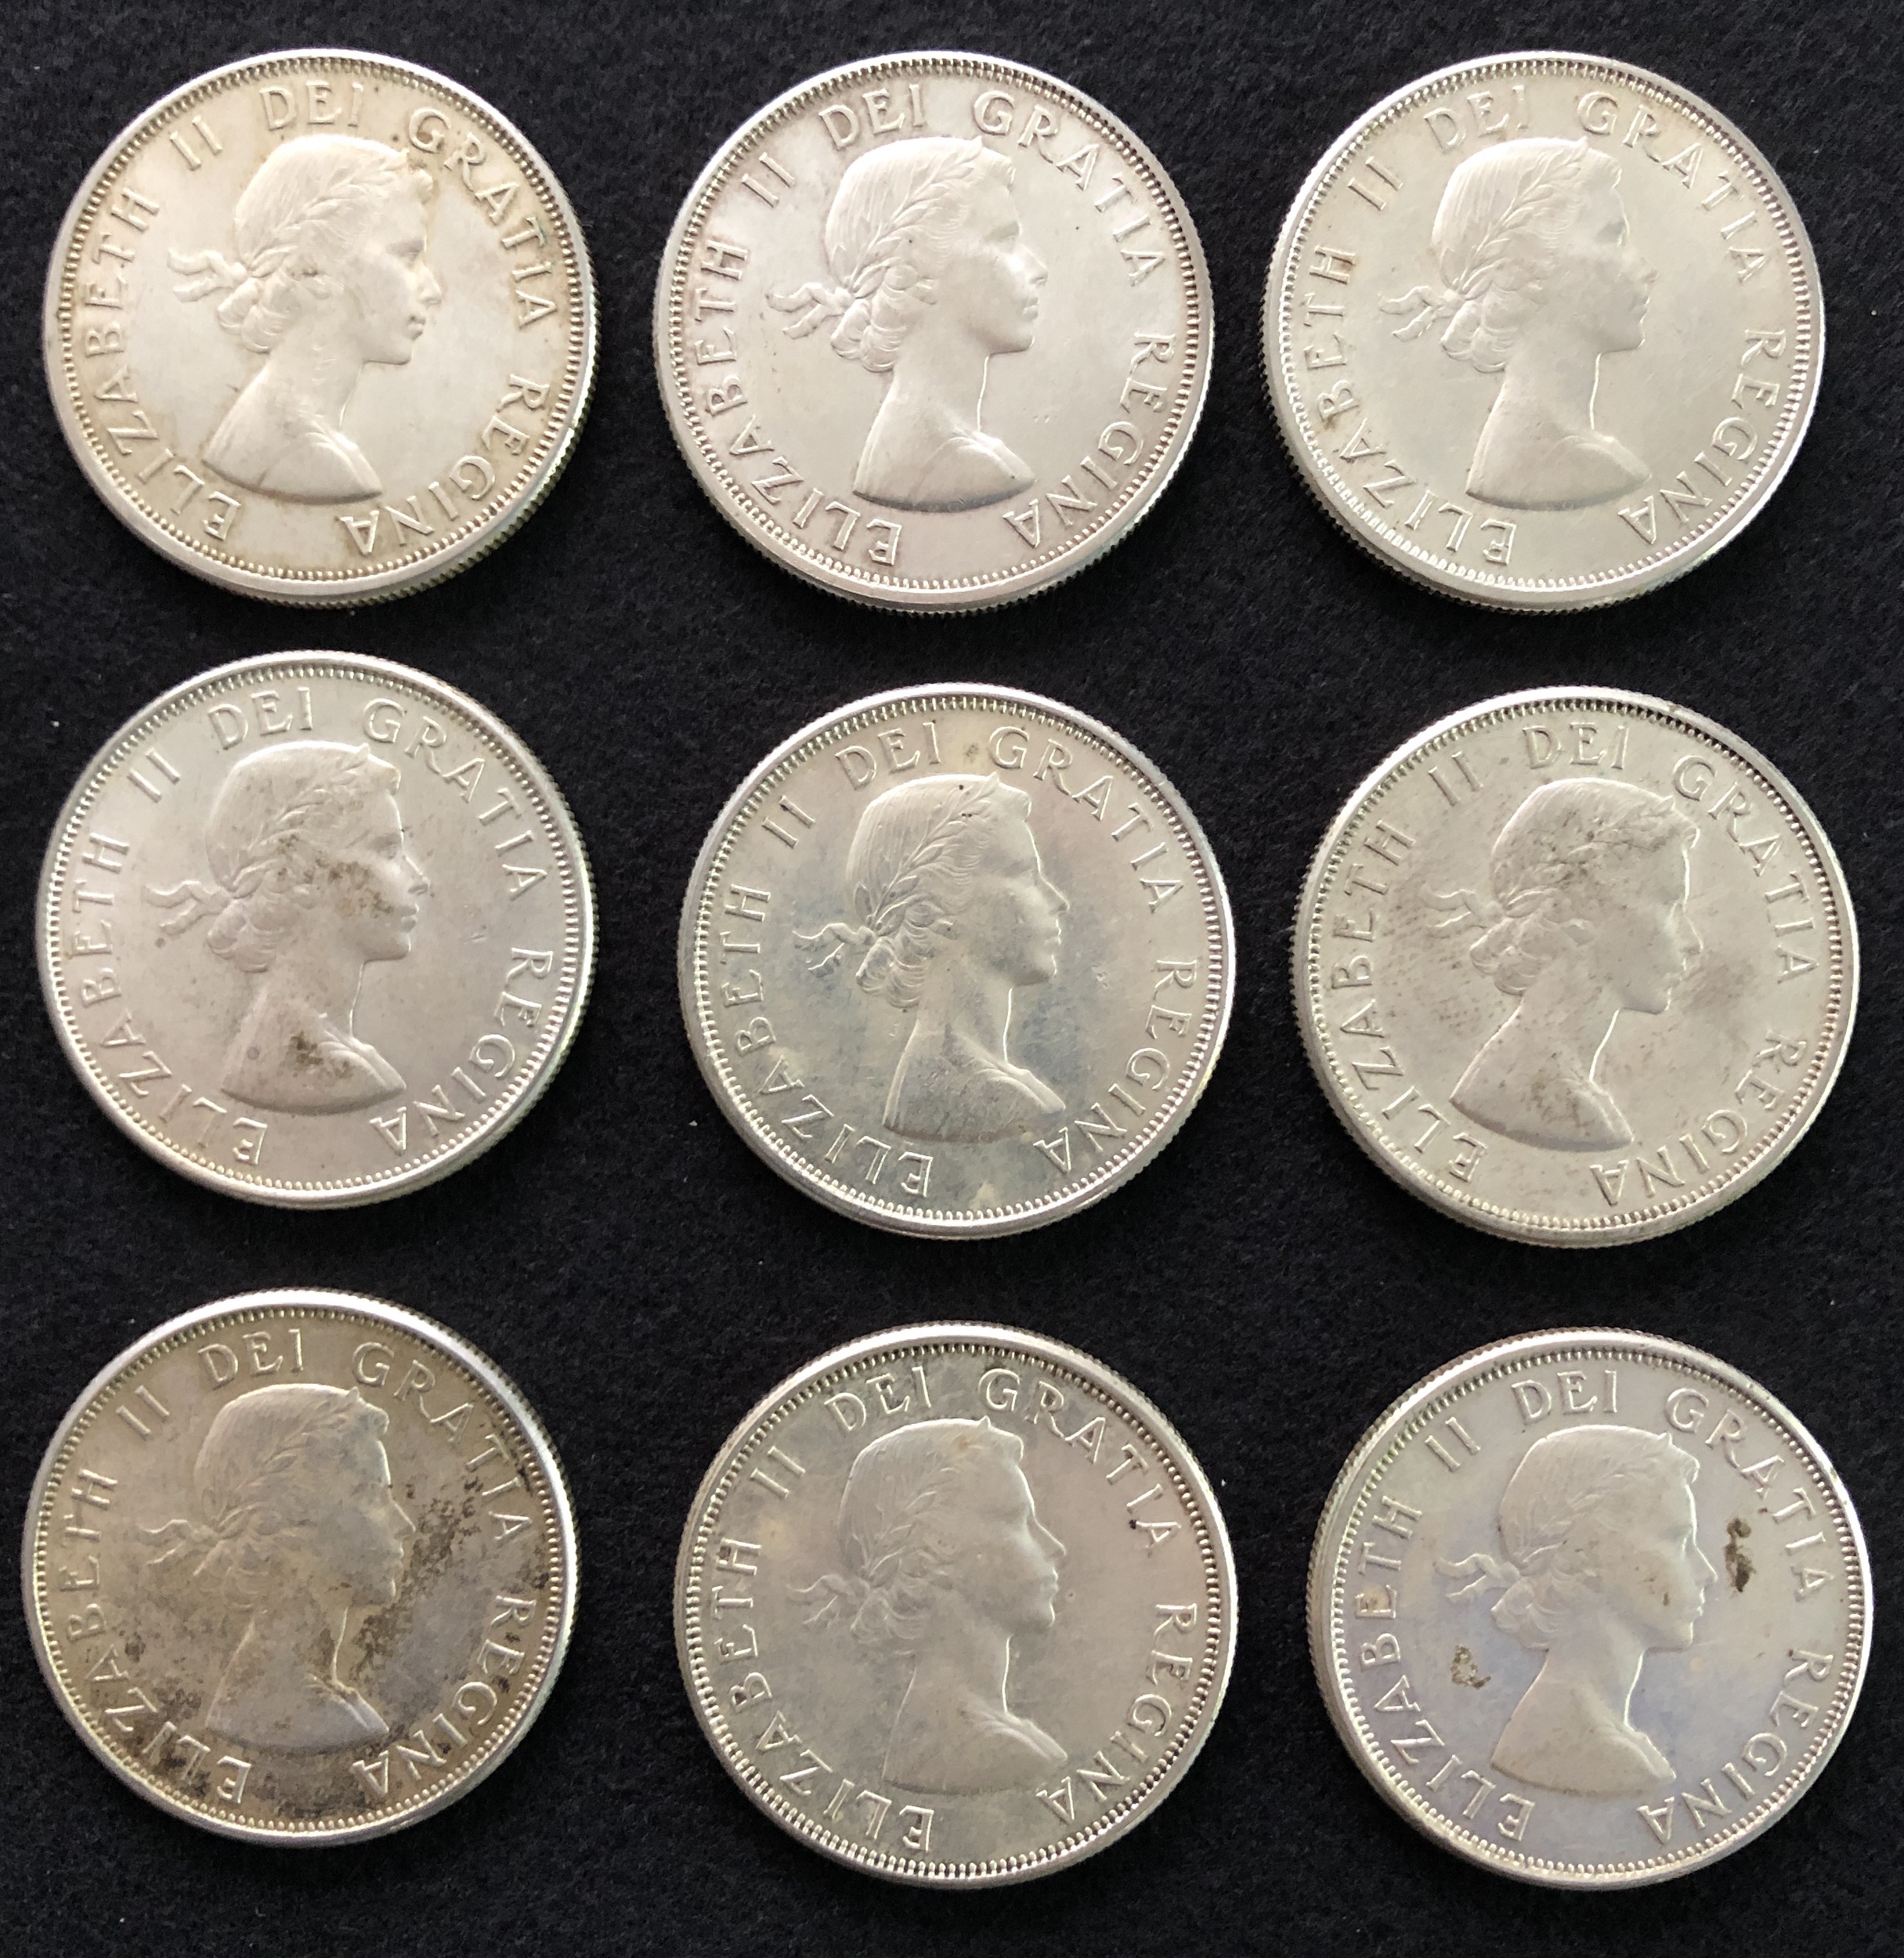 50 cents - 1963 back.JPG